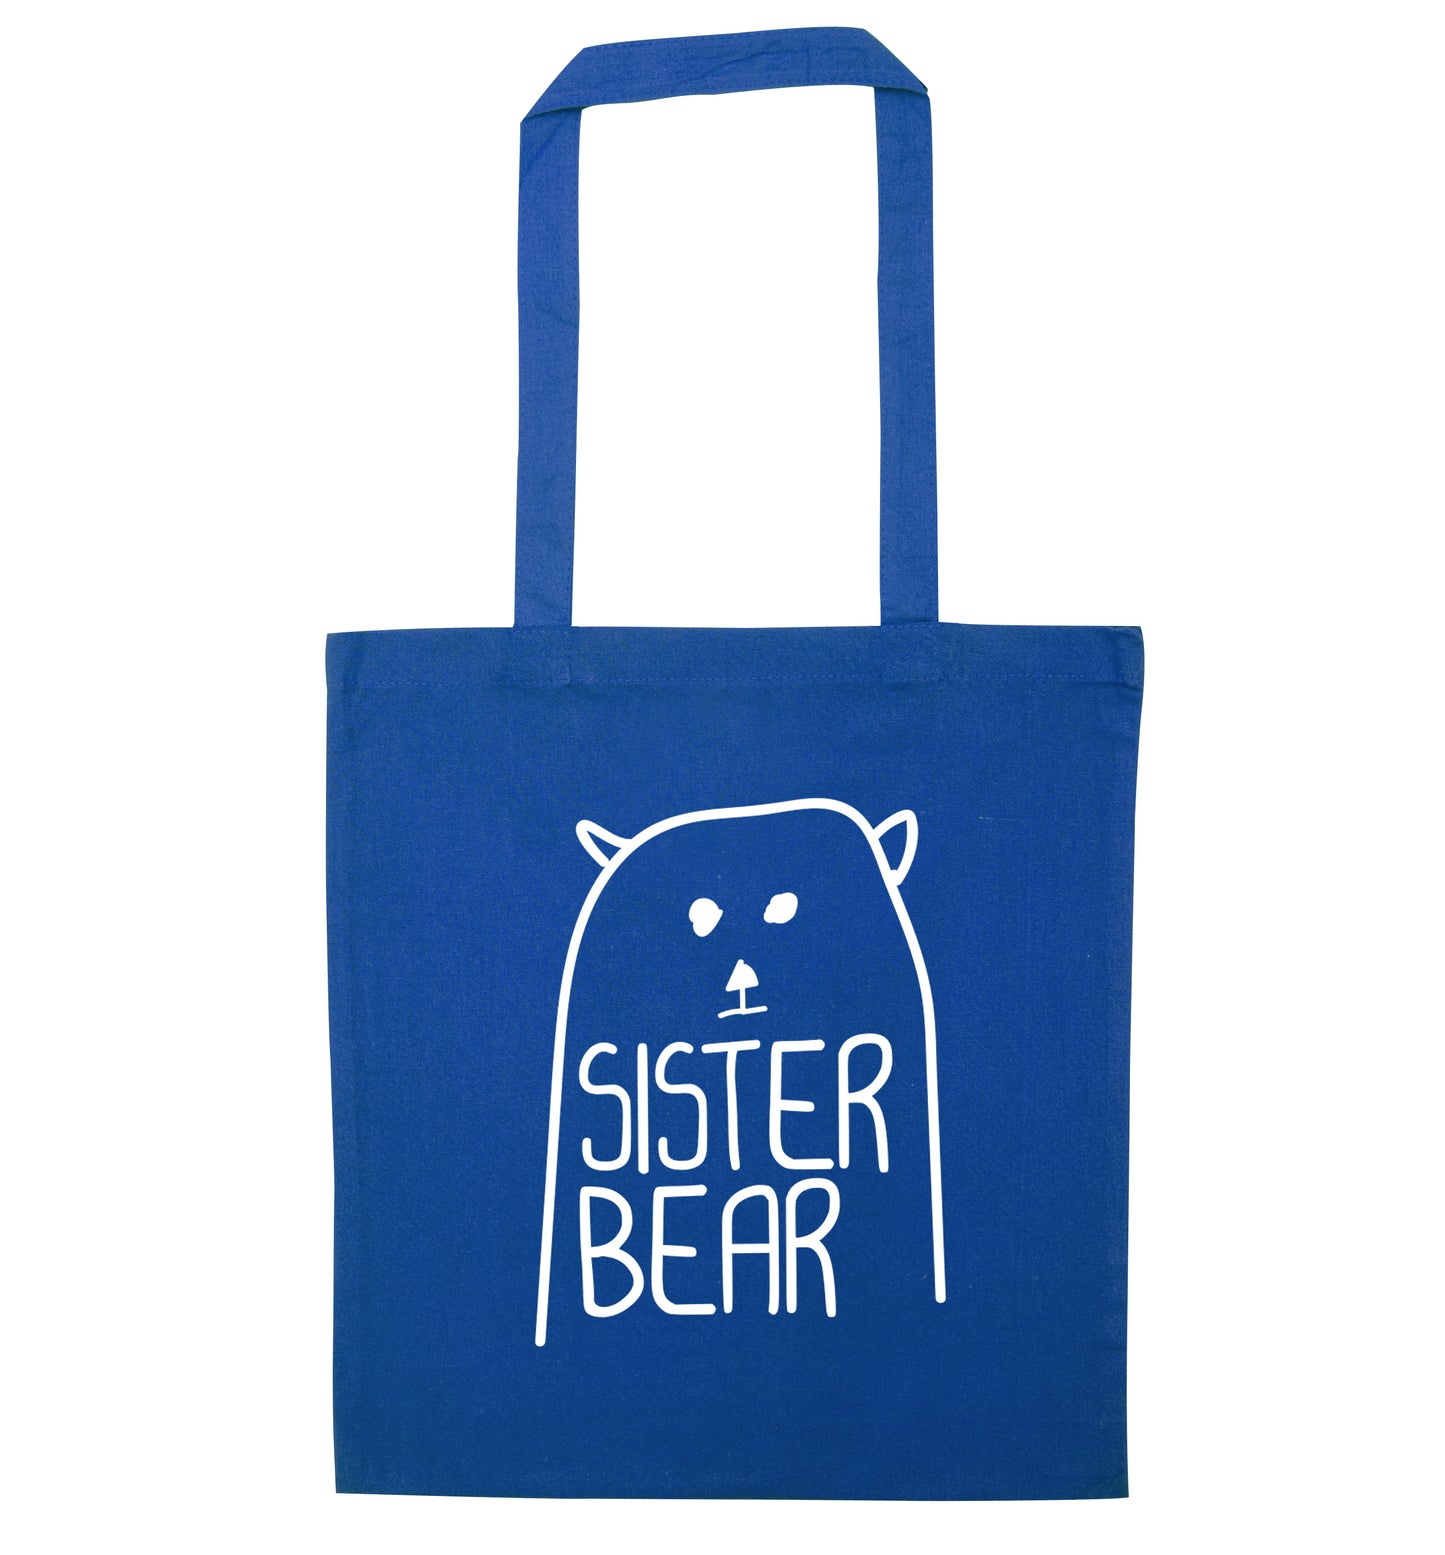 Sister bear blue tote bag